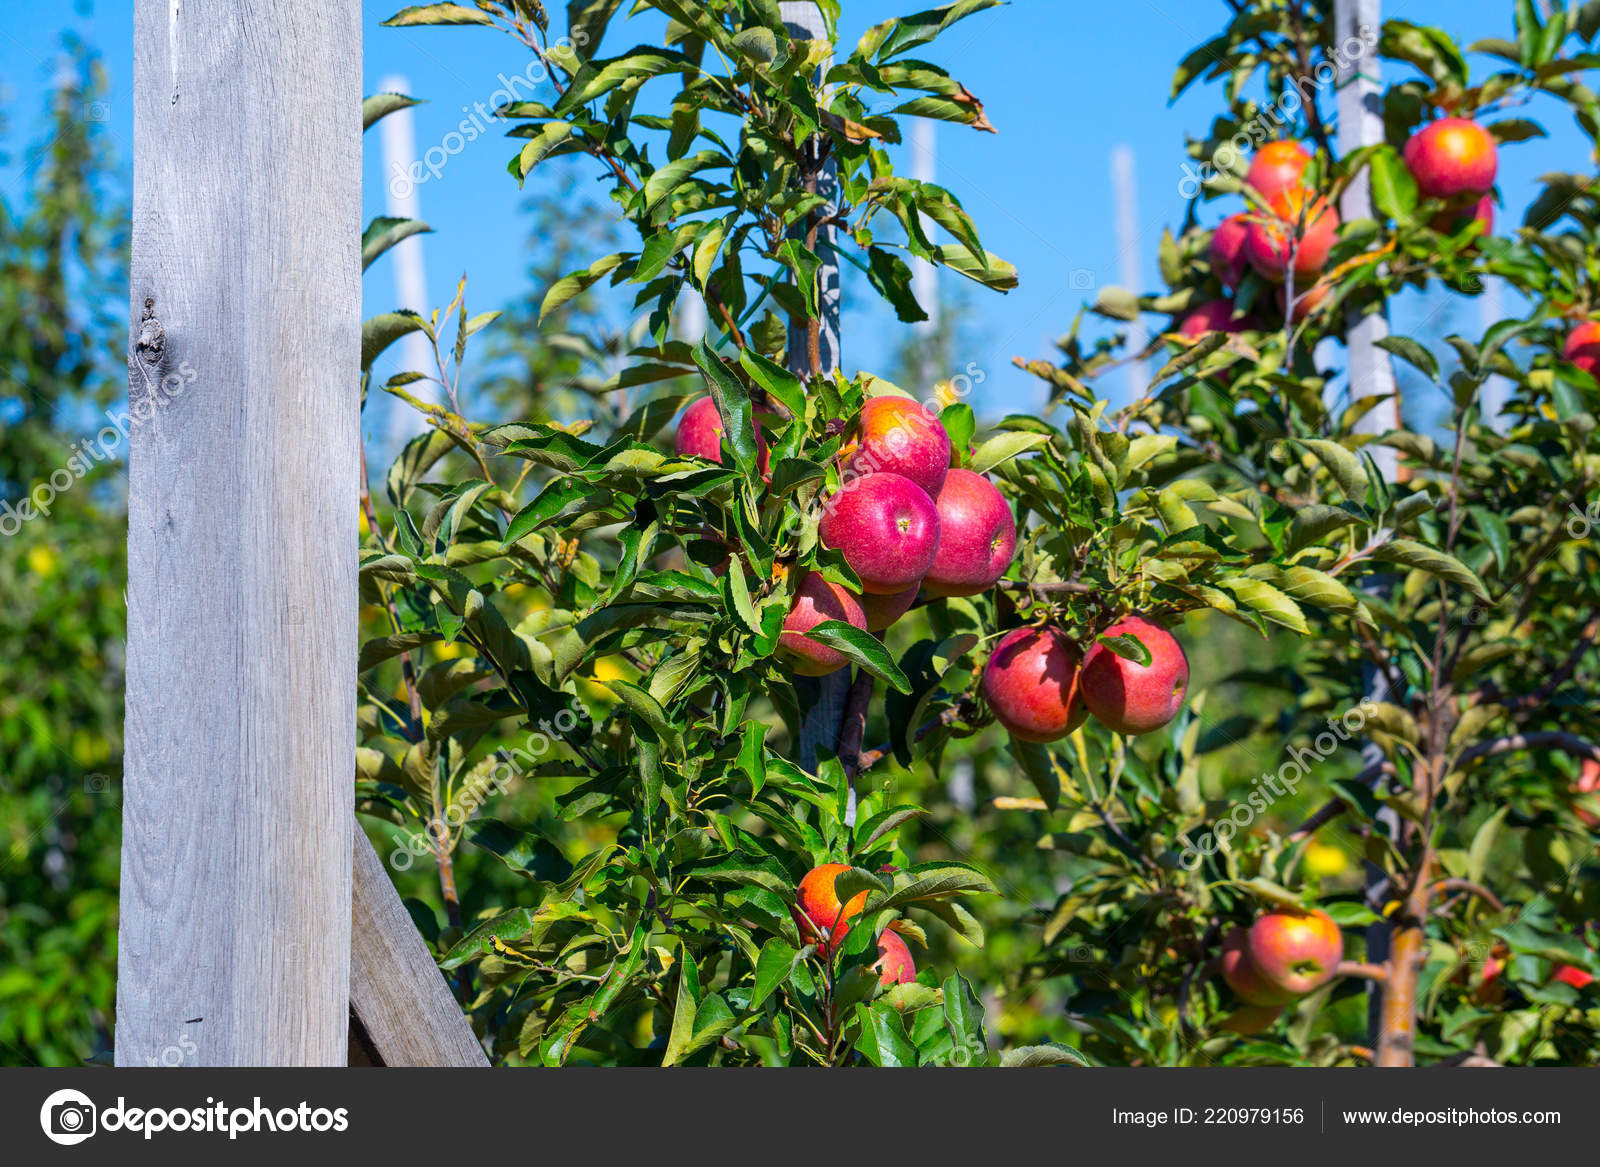 https://st4.depositphotos.com/5749056/22097/i/1600/depositphotos_220979156-stock-photo-ripe-fruits-red-apples-branches.jpg